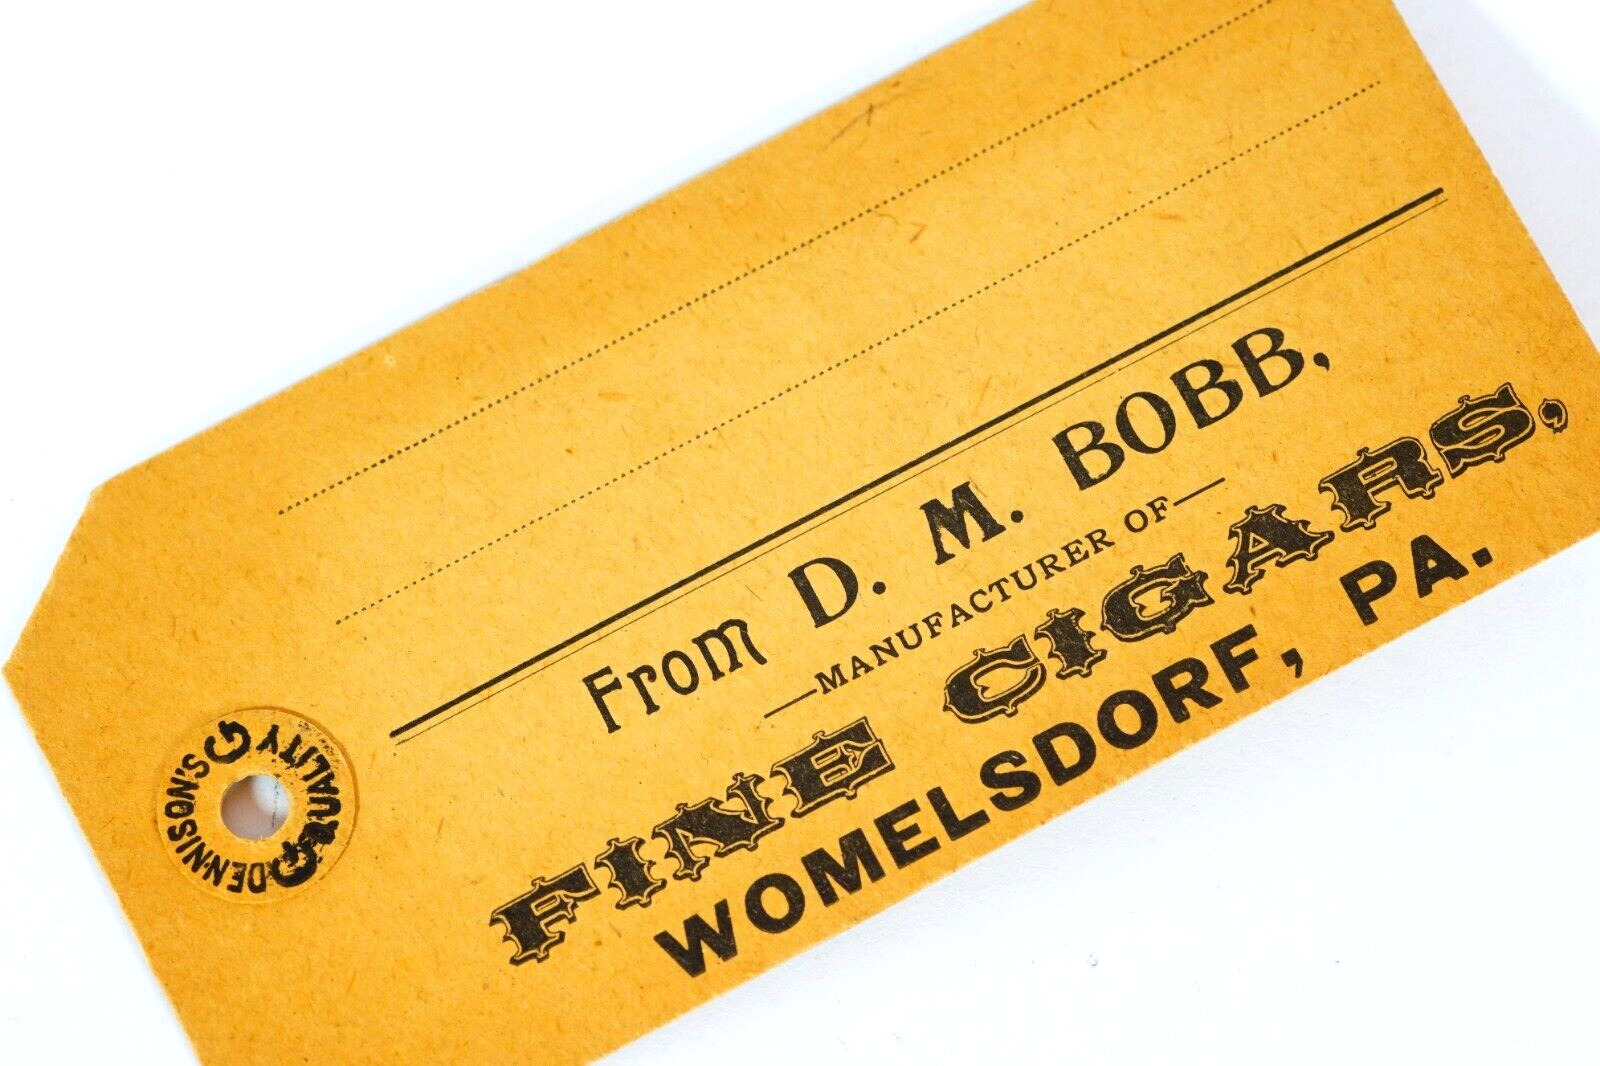 D.M. Bobb Fine Cigars Womelsdorf PA GG Dennison\'s Antique Cigar Manufacturer Tag